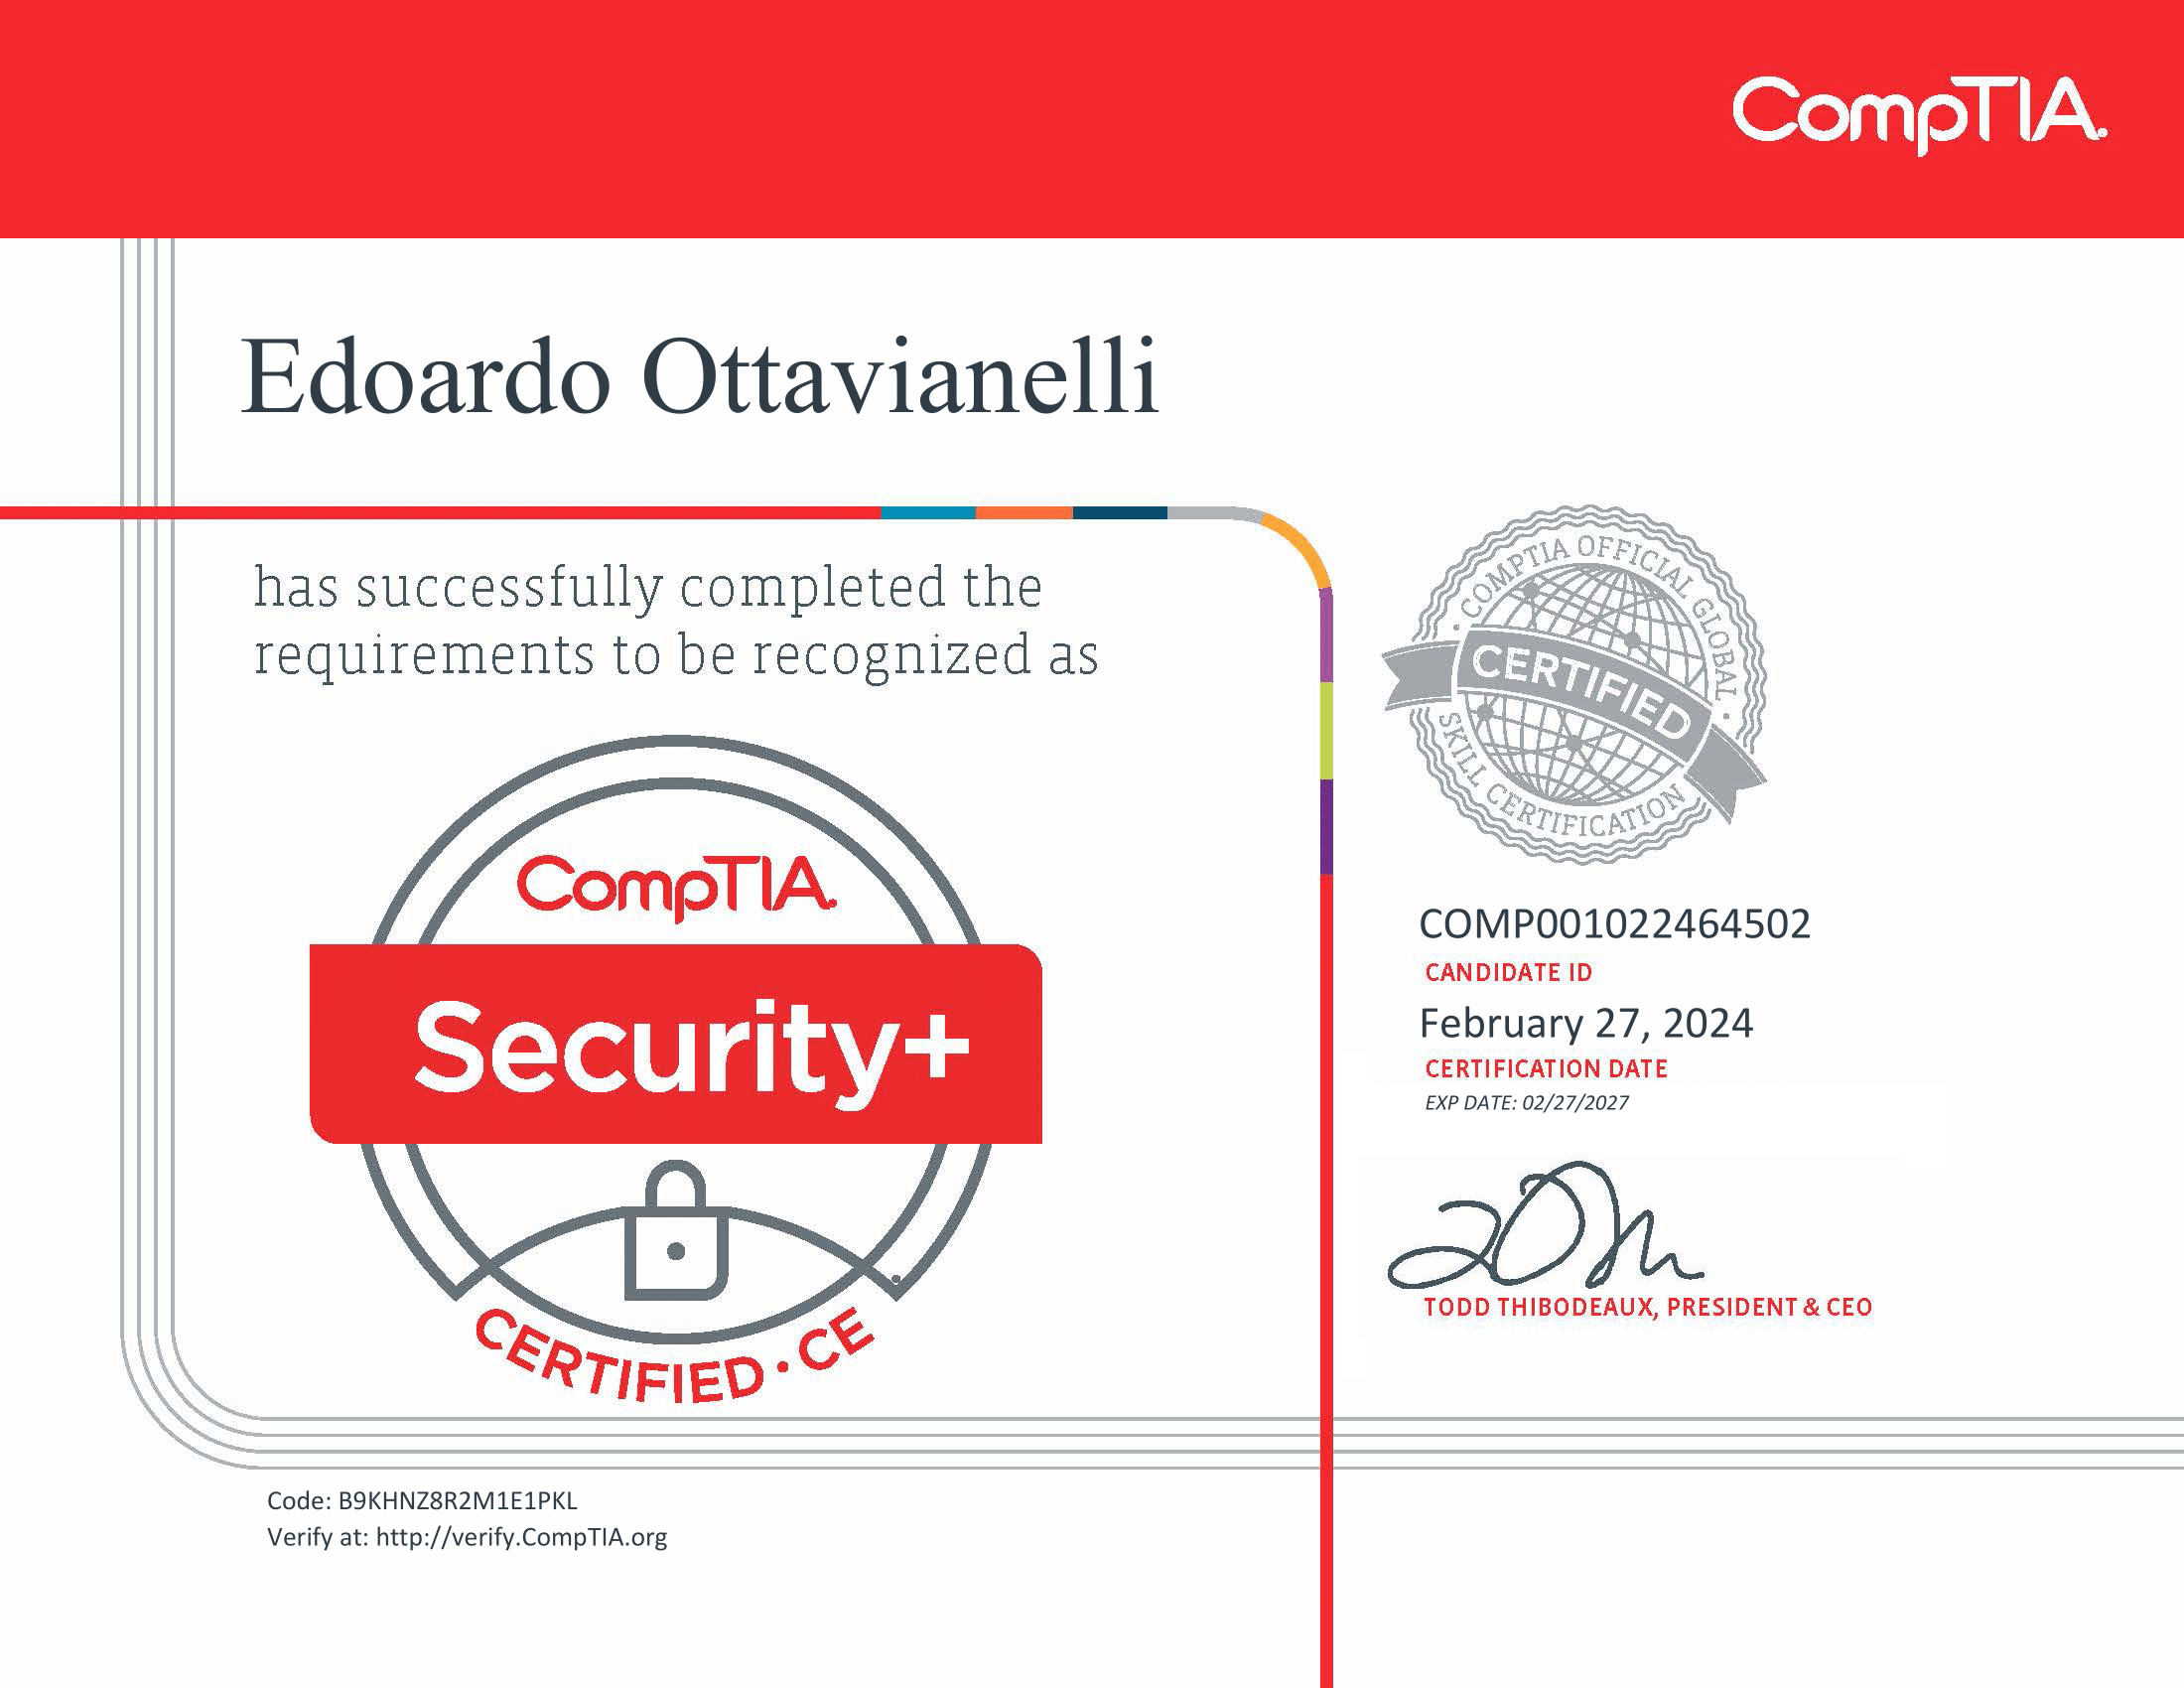 comptia security edoardottt certification